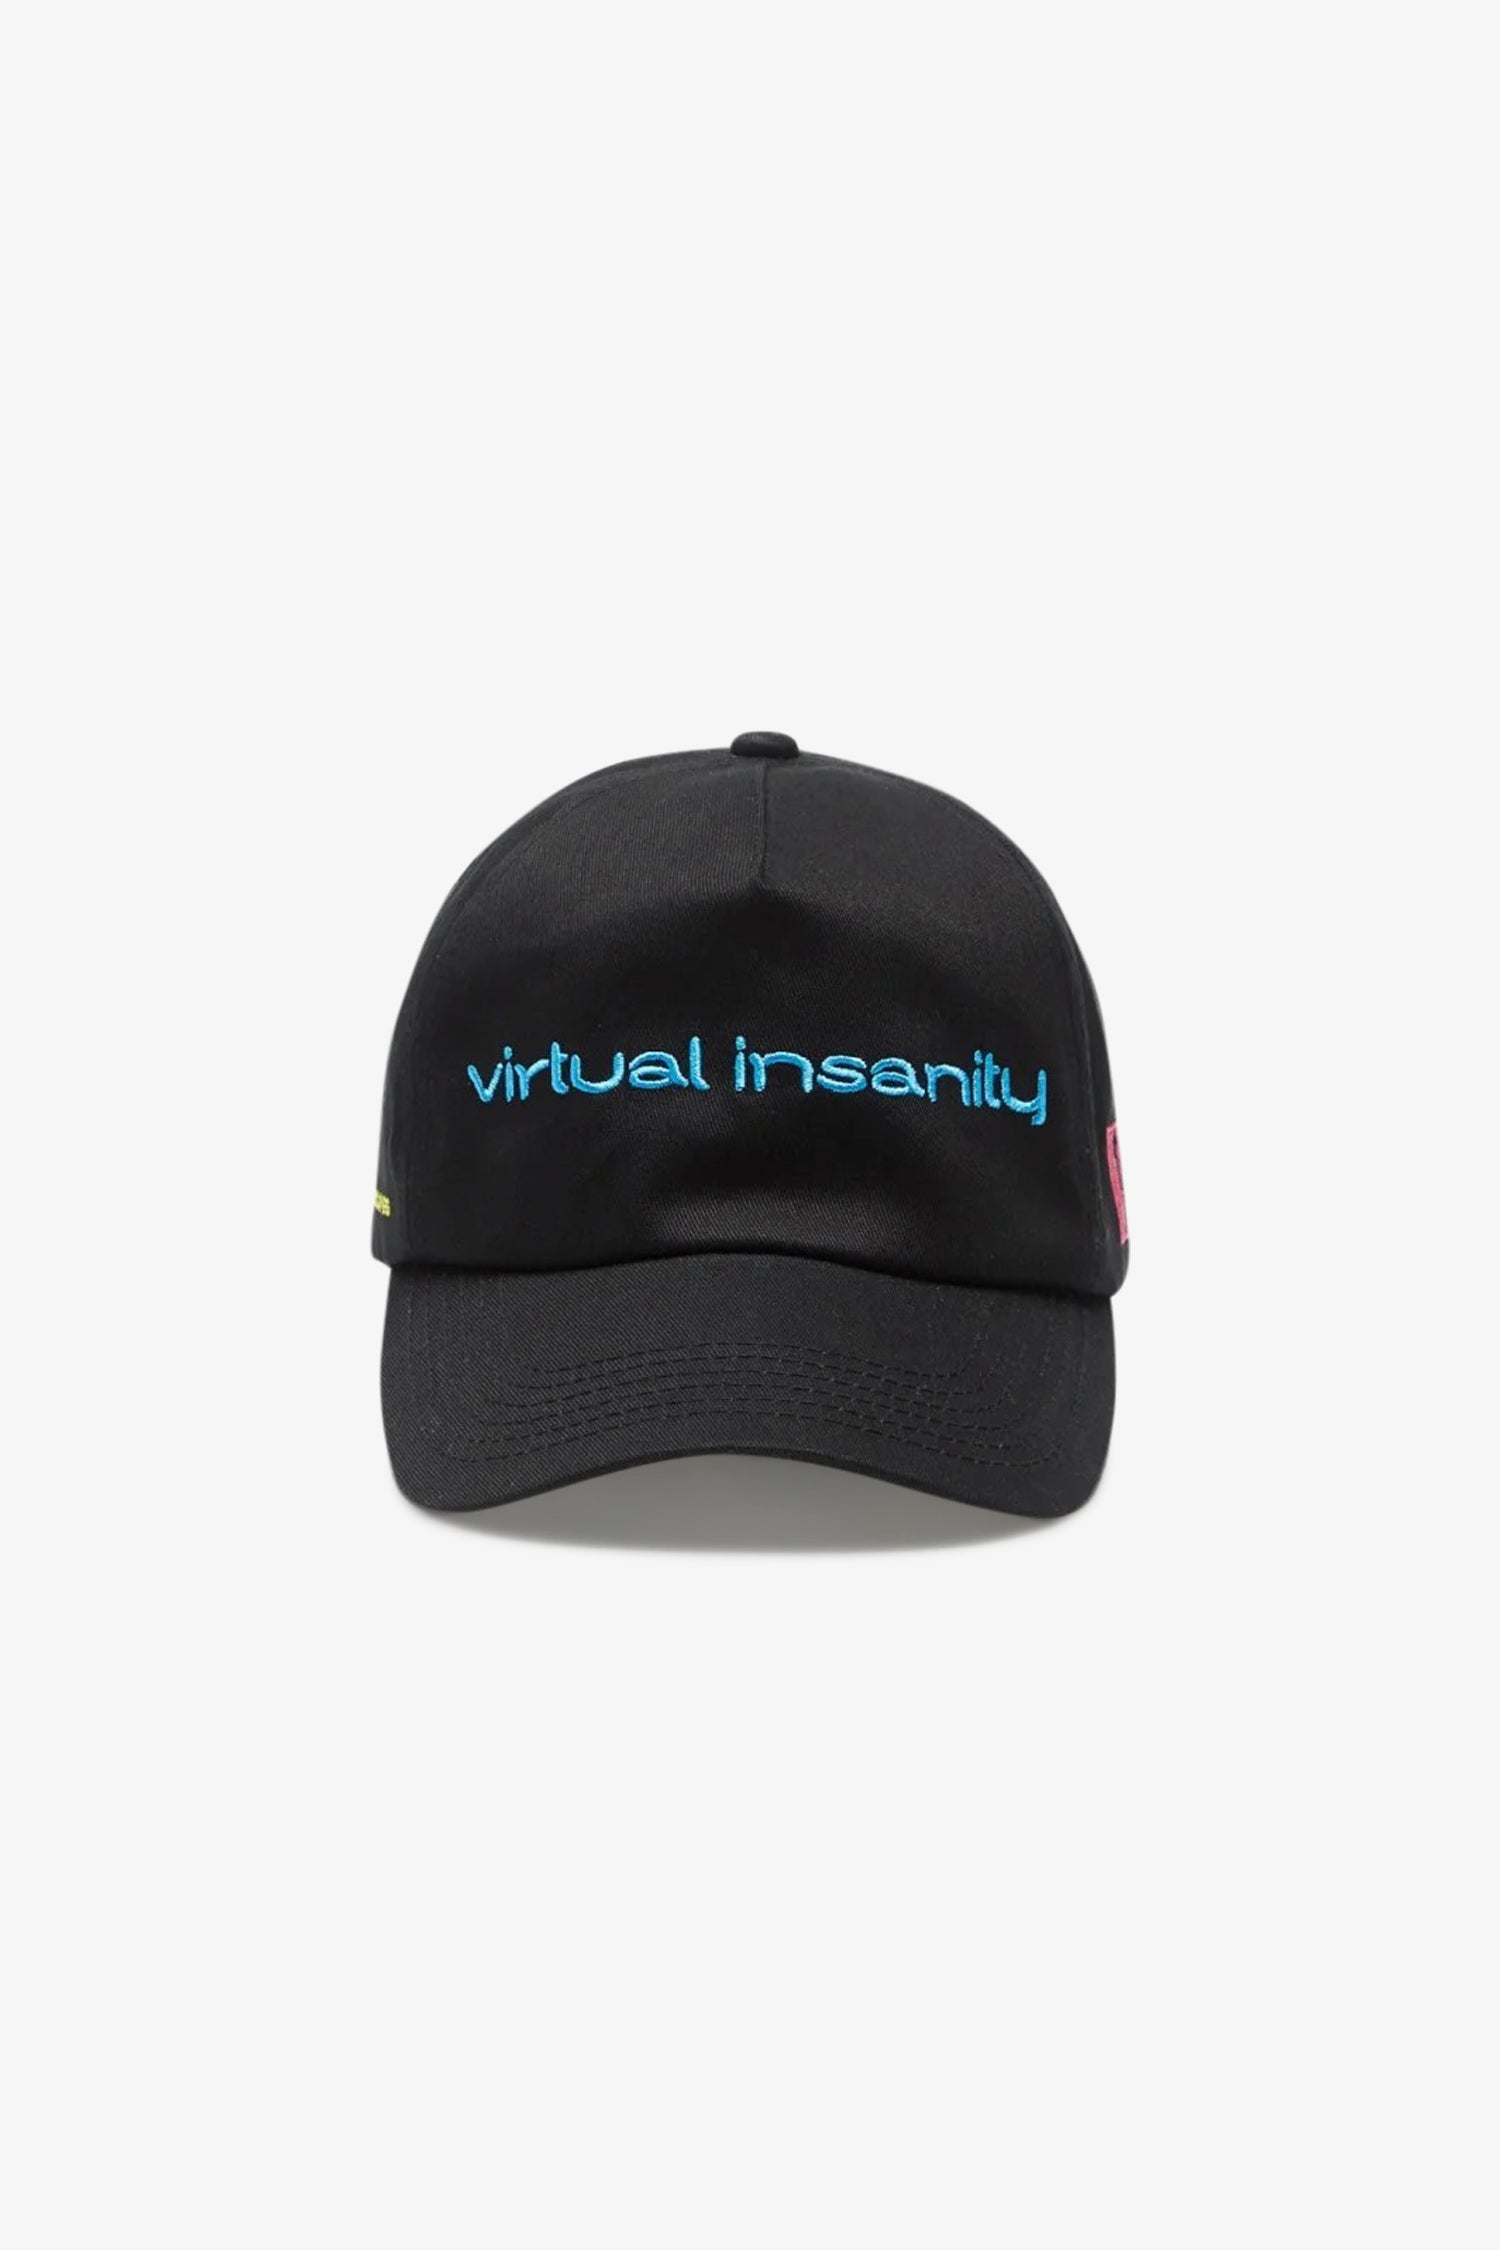 Virtual Insanity Snapback Cap- Selectshop FRAME